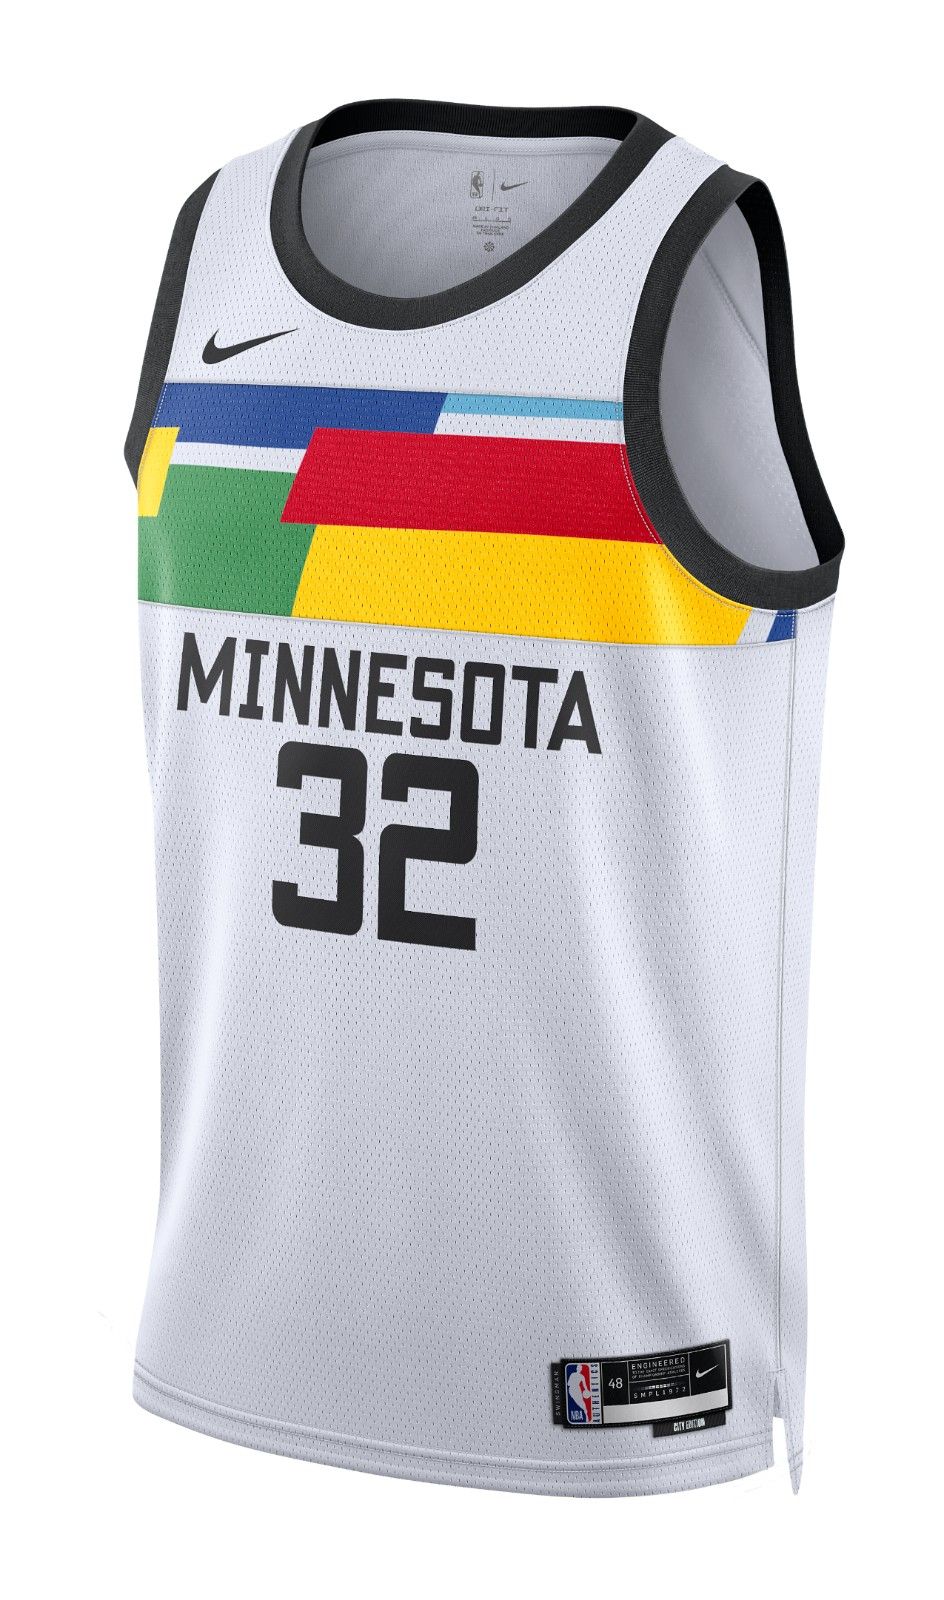 Minnesota Timberwolves Unveil Lake-Inspired City Edition Uniforms